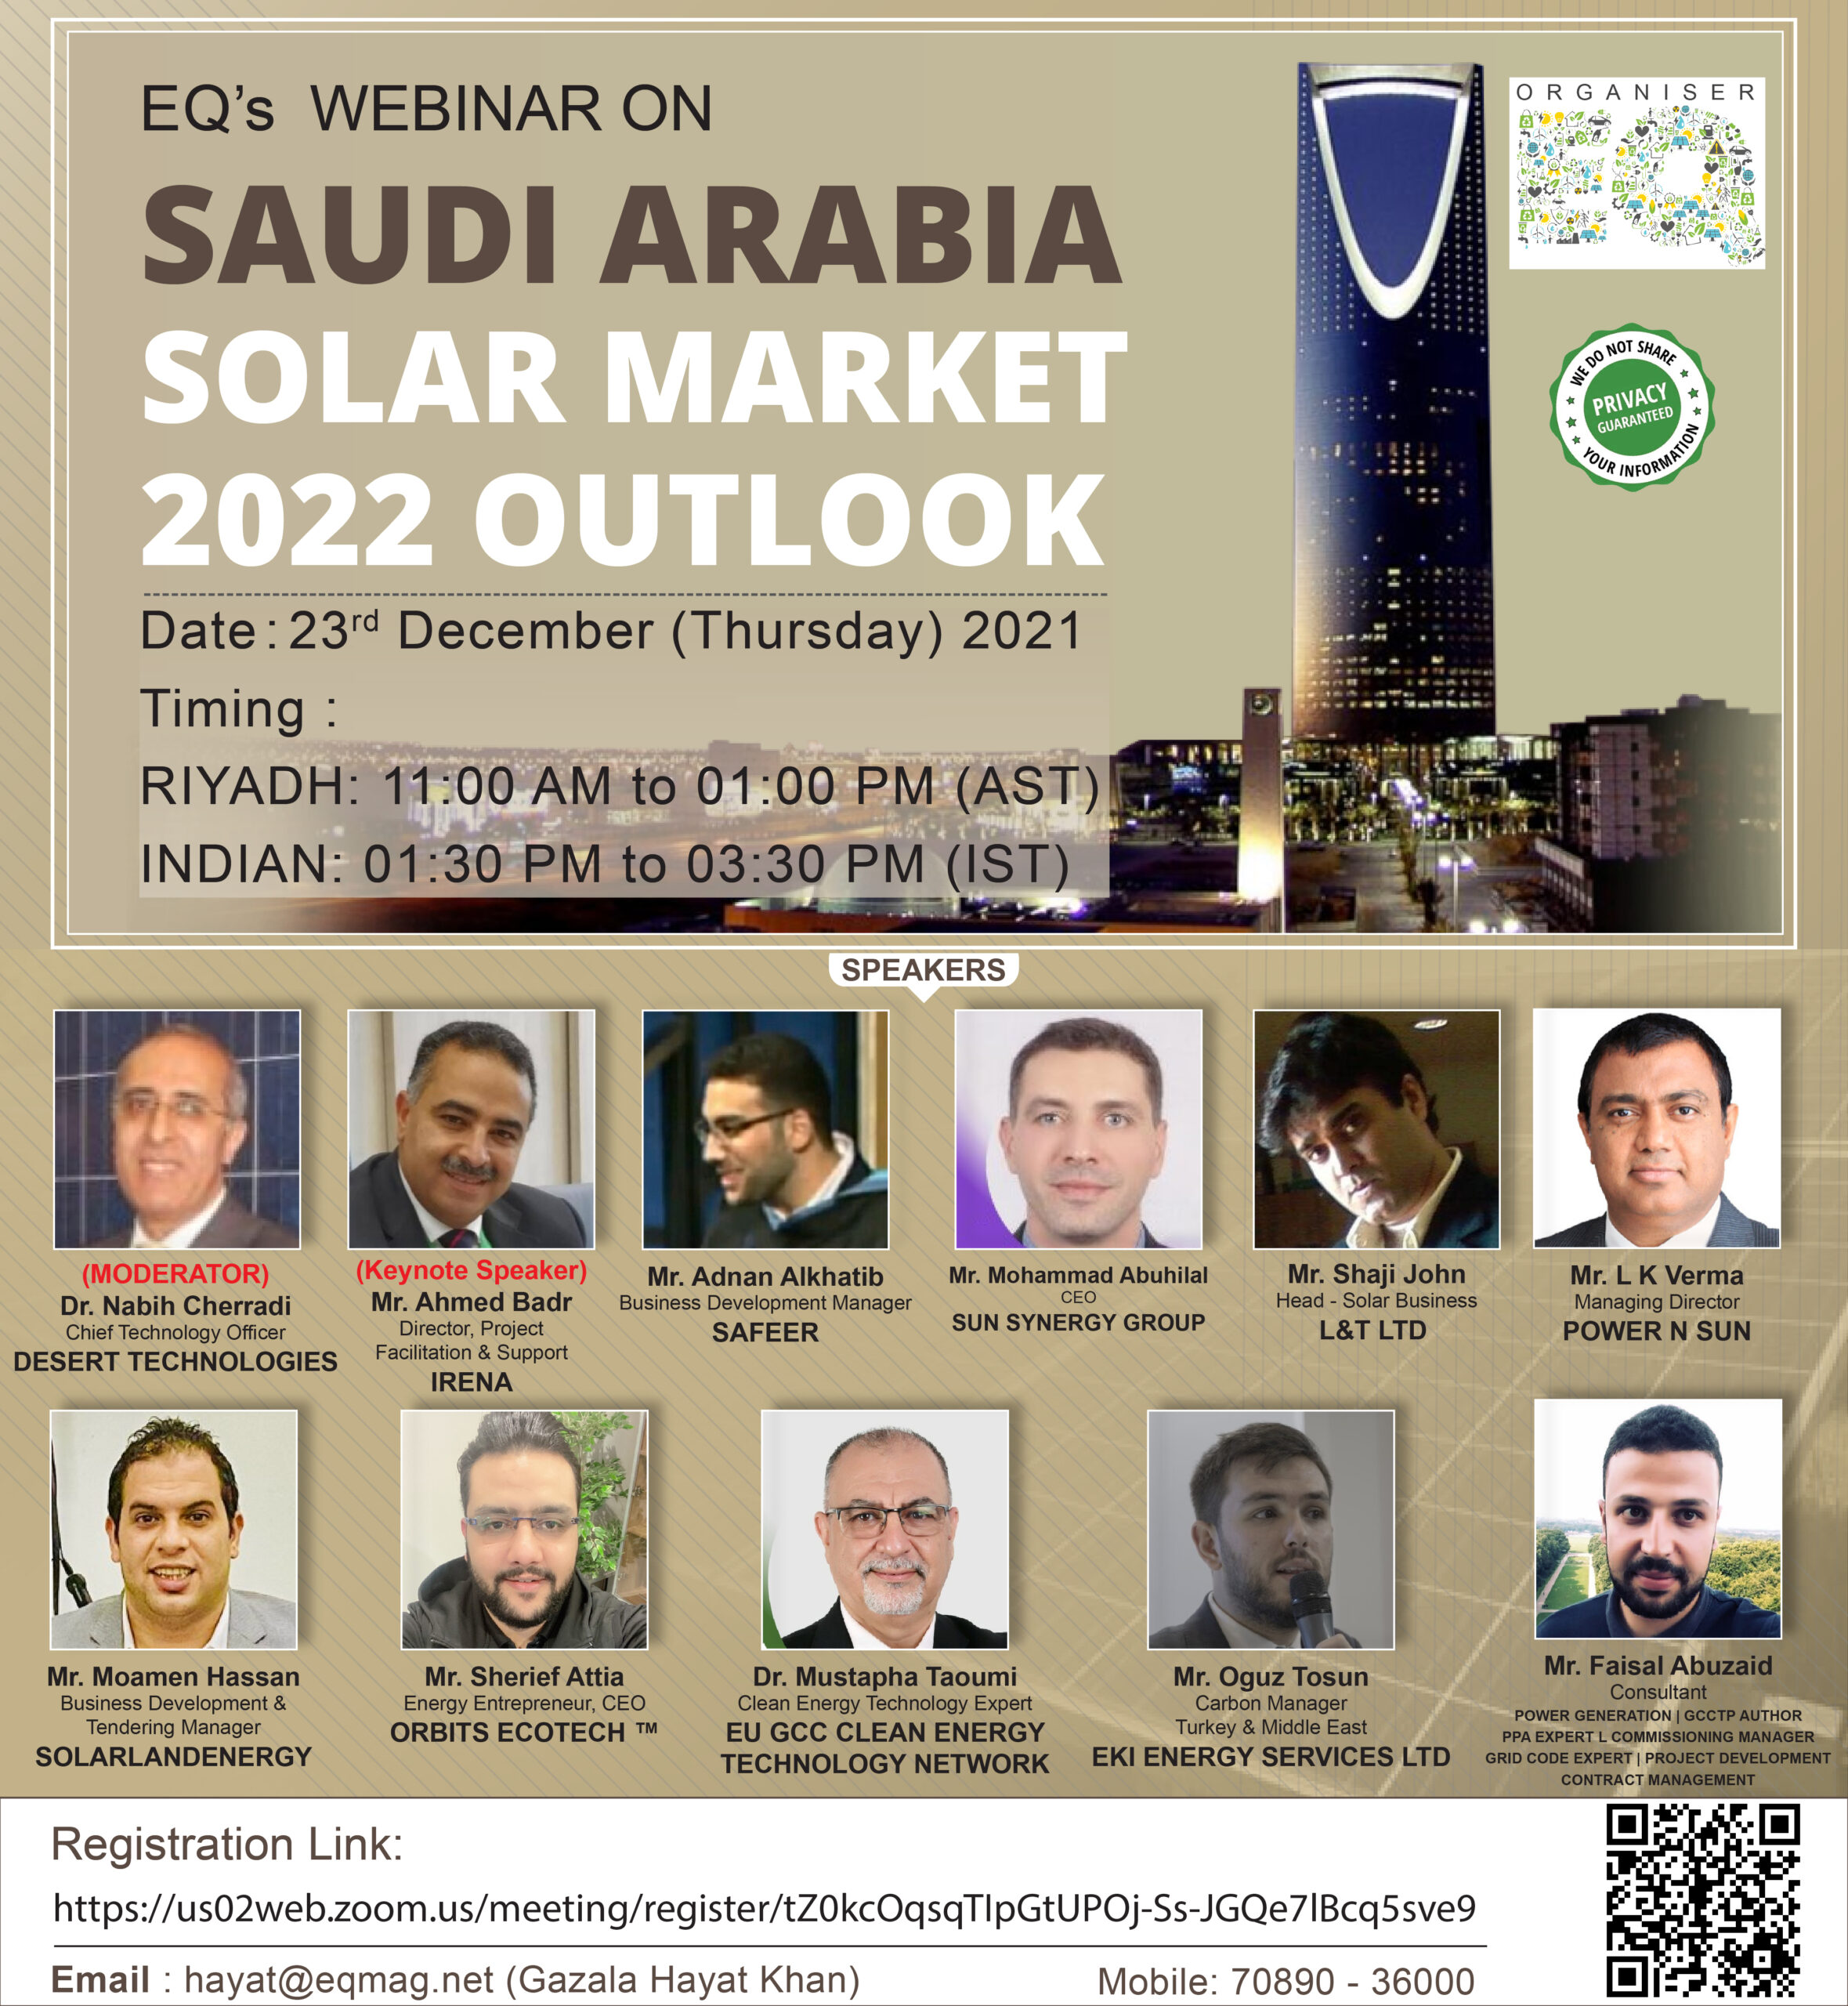 EQ Webinar on Saudi Arabia 2022 Solar Market Outlook 23rd December 2021(Thursday) From 11:00 AM Onwards….Registered Now !!!